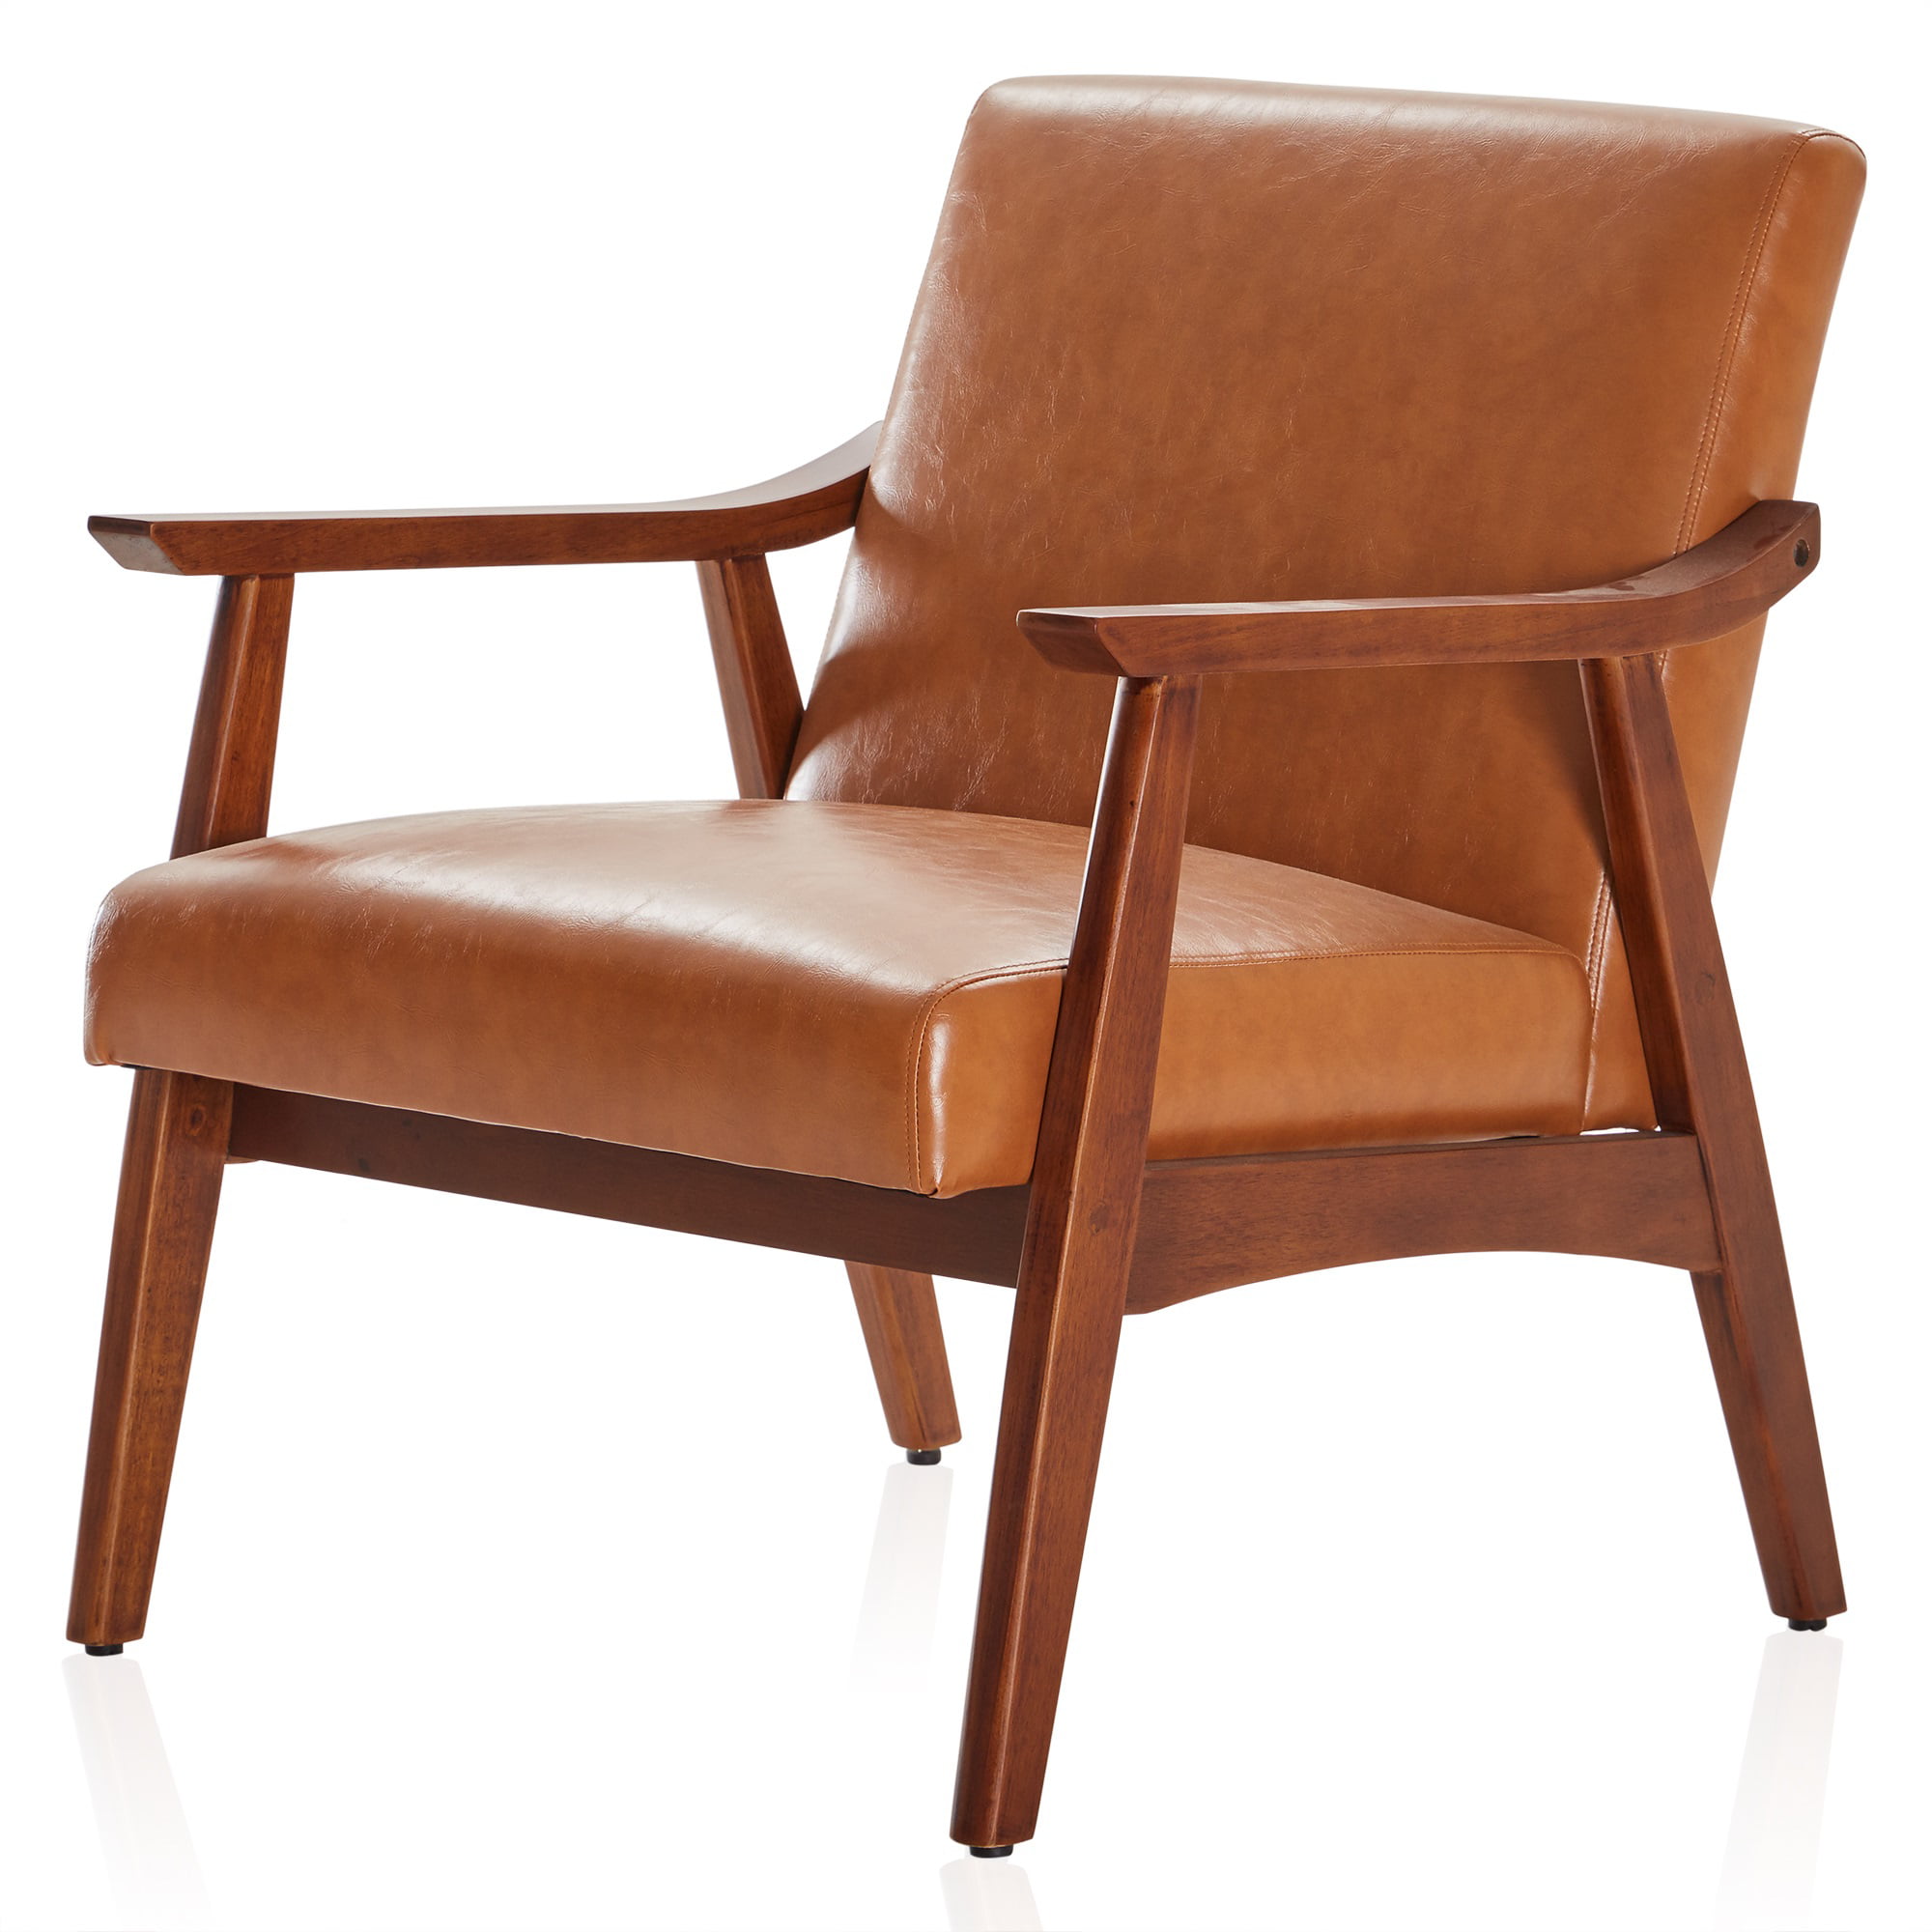 BELLEZE Mid-Century Modern Accent Chair Living Room ...